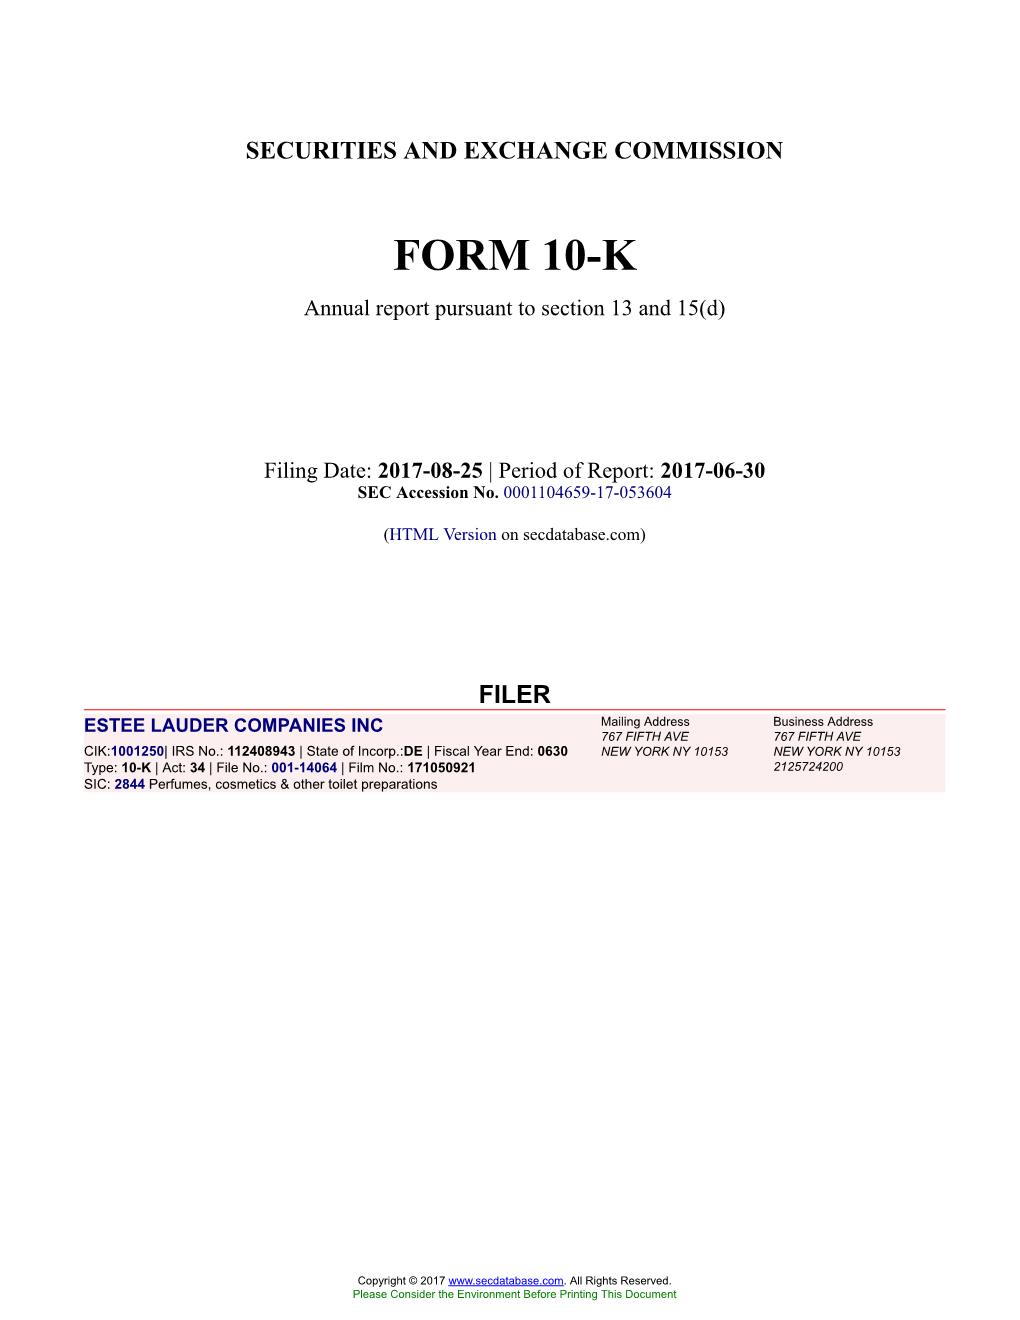 ESTEE LAUDER COMPANIES INC Form 10-K Annual Report Filed